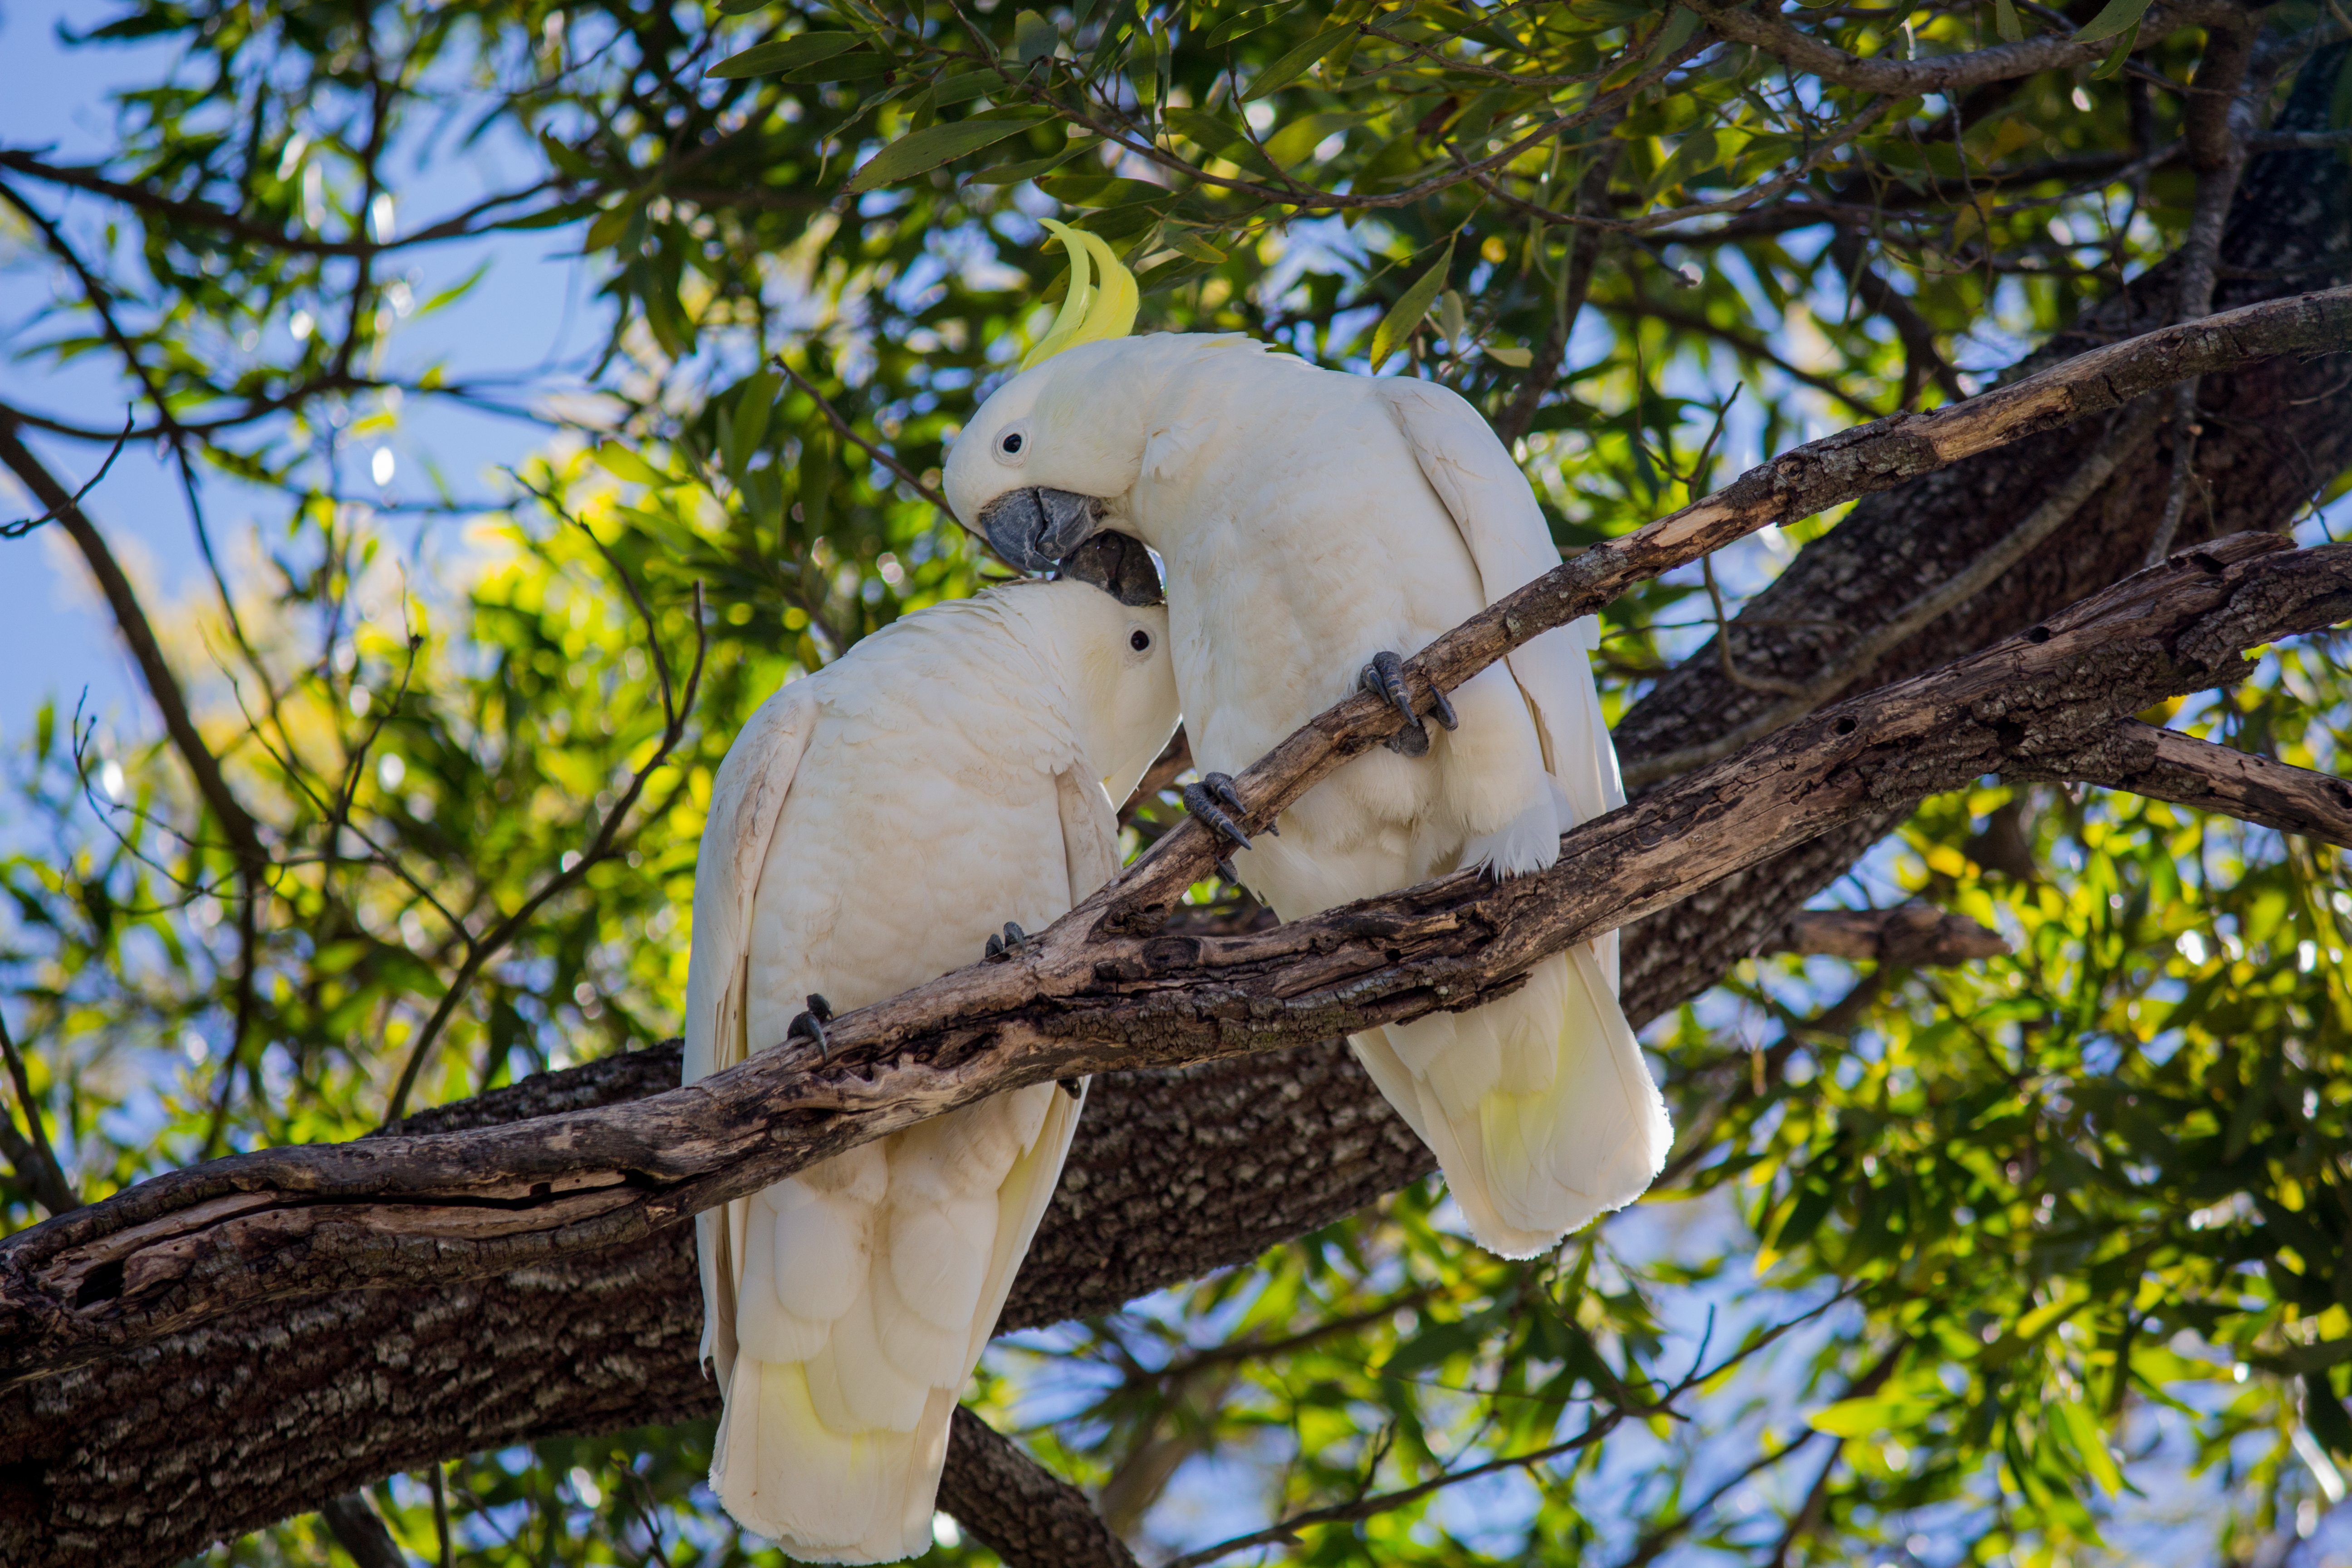 Cuddling Cockatoos